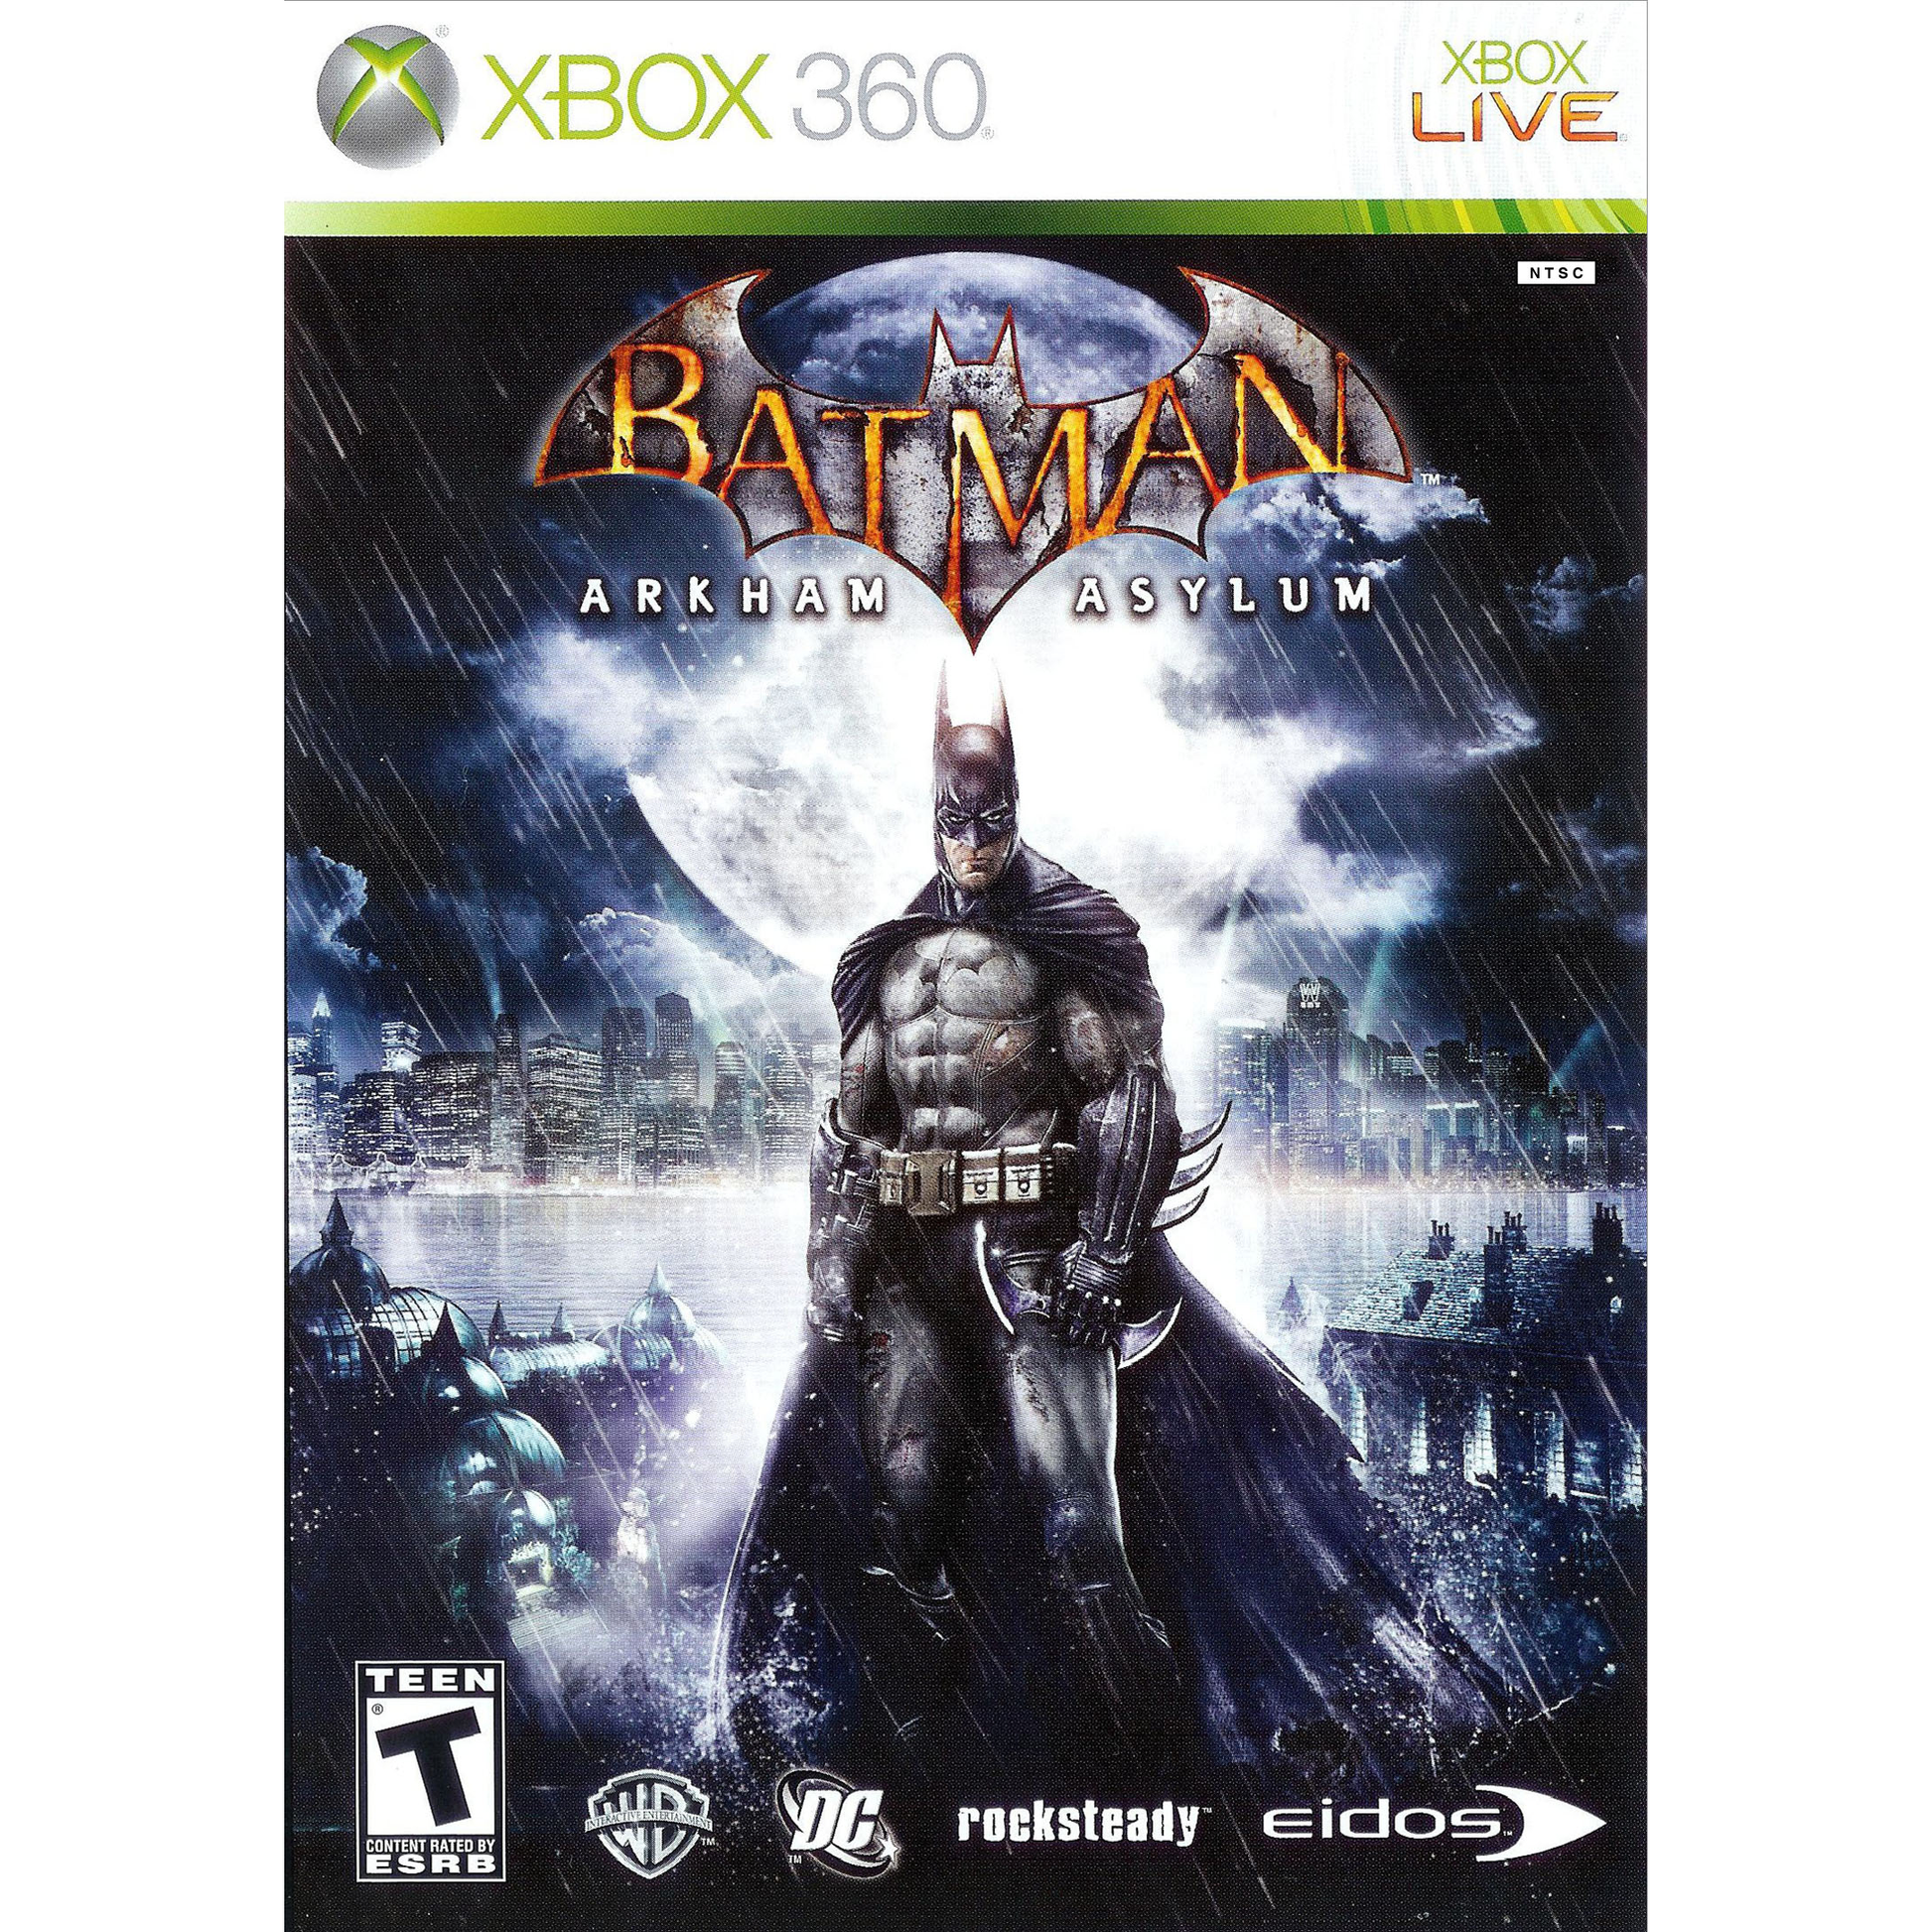 Batman Arkham Asylum: The Road To Arkham Digital Psp Comic on PSP